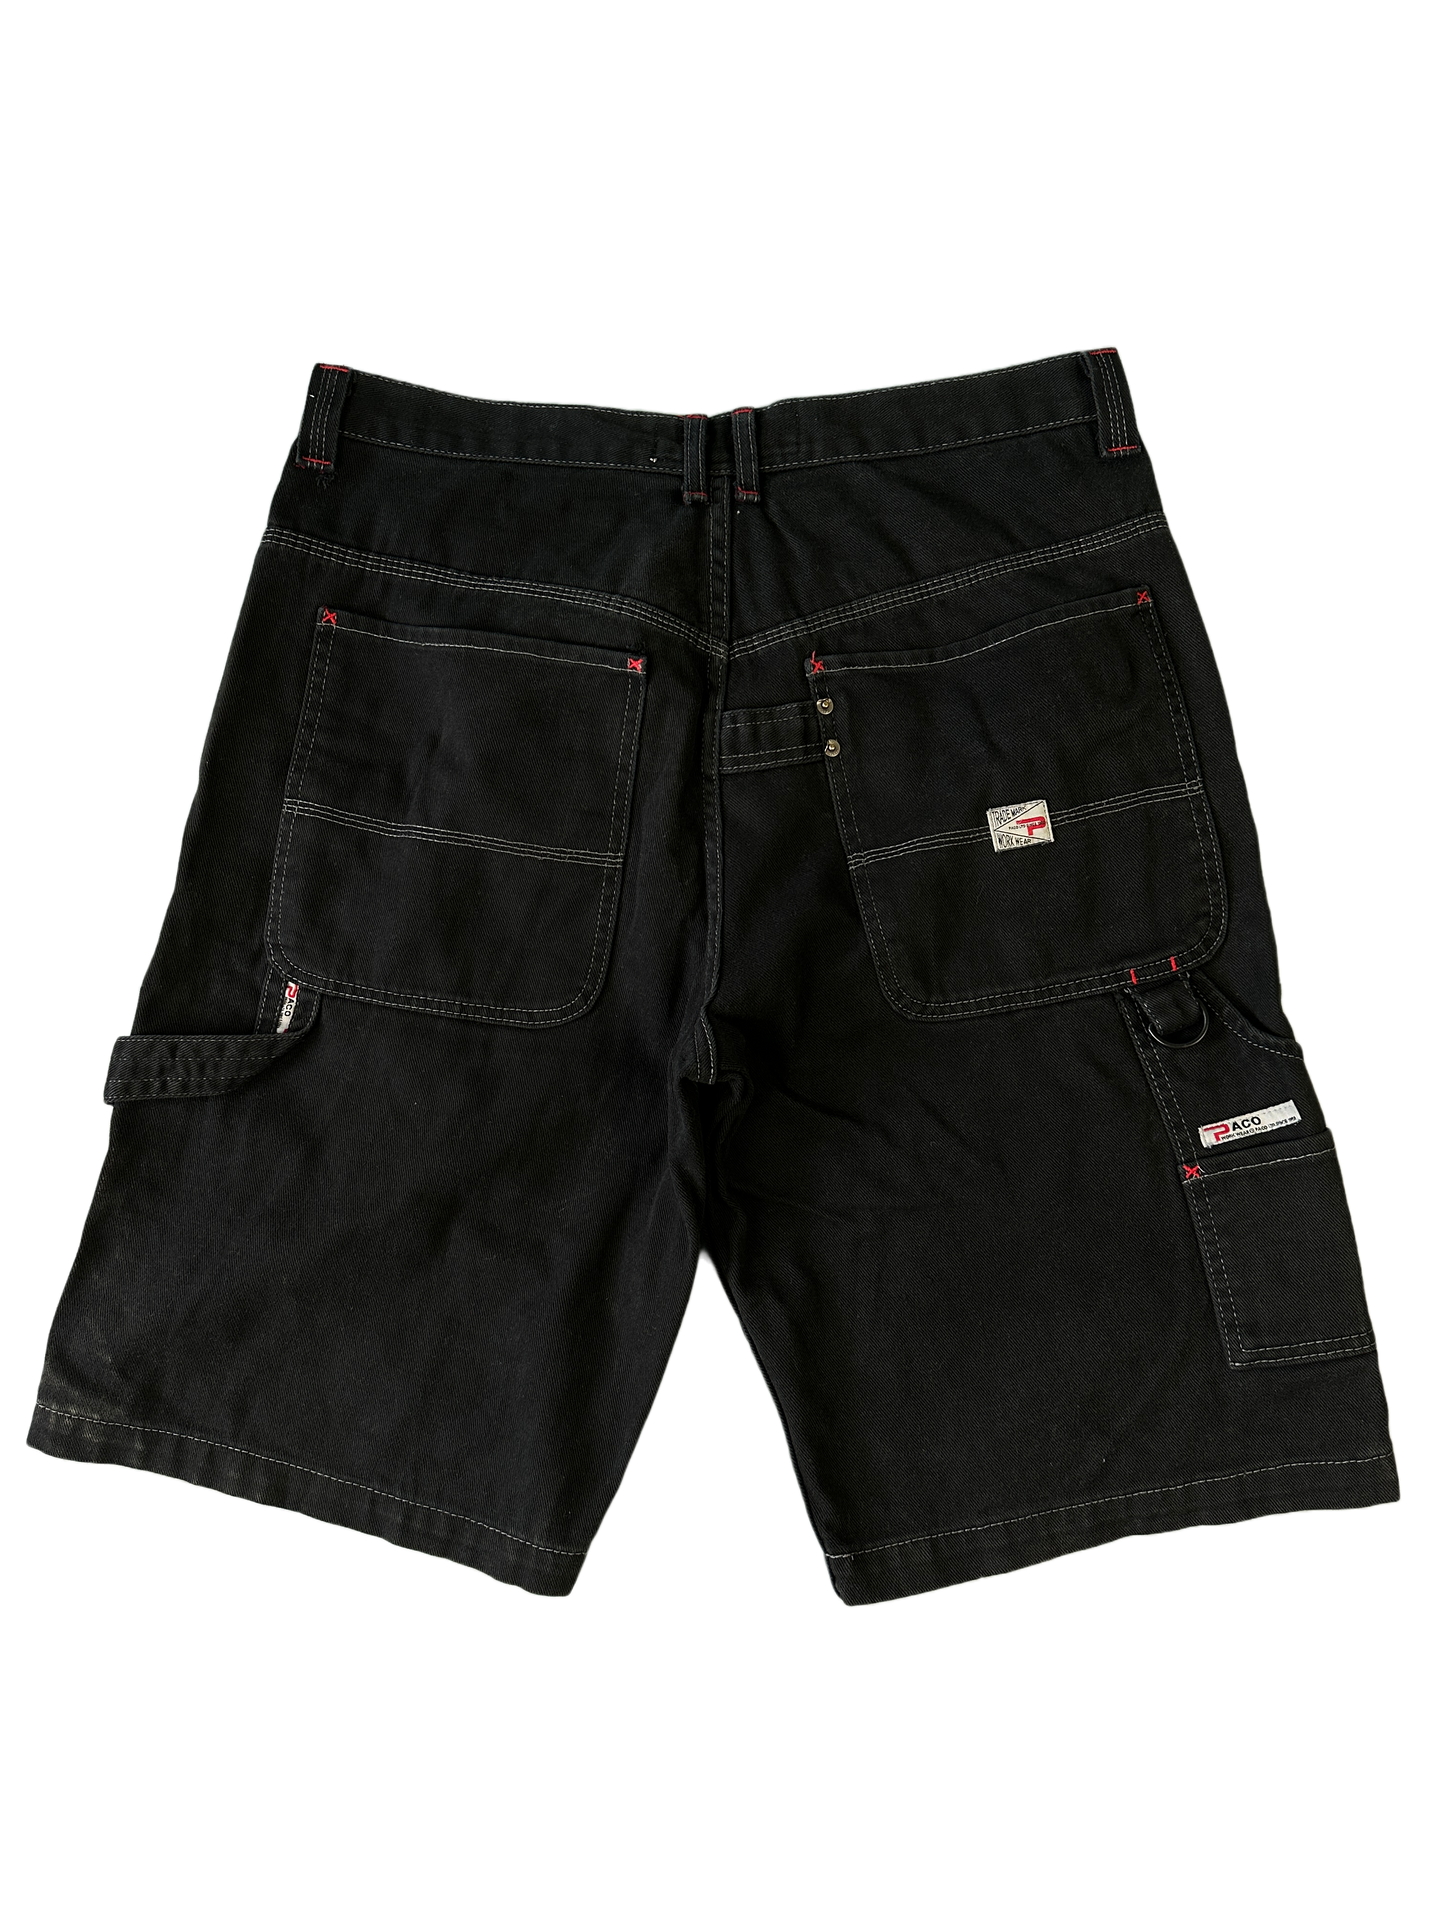 Paco Sport Vintage Carpenter Shorts - 34